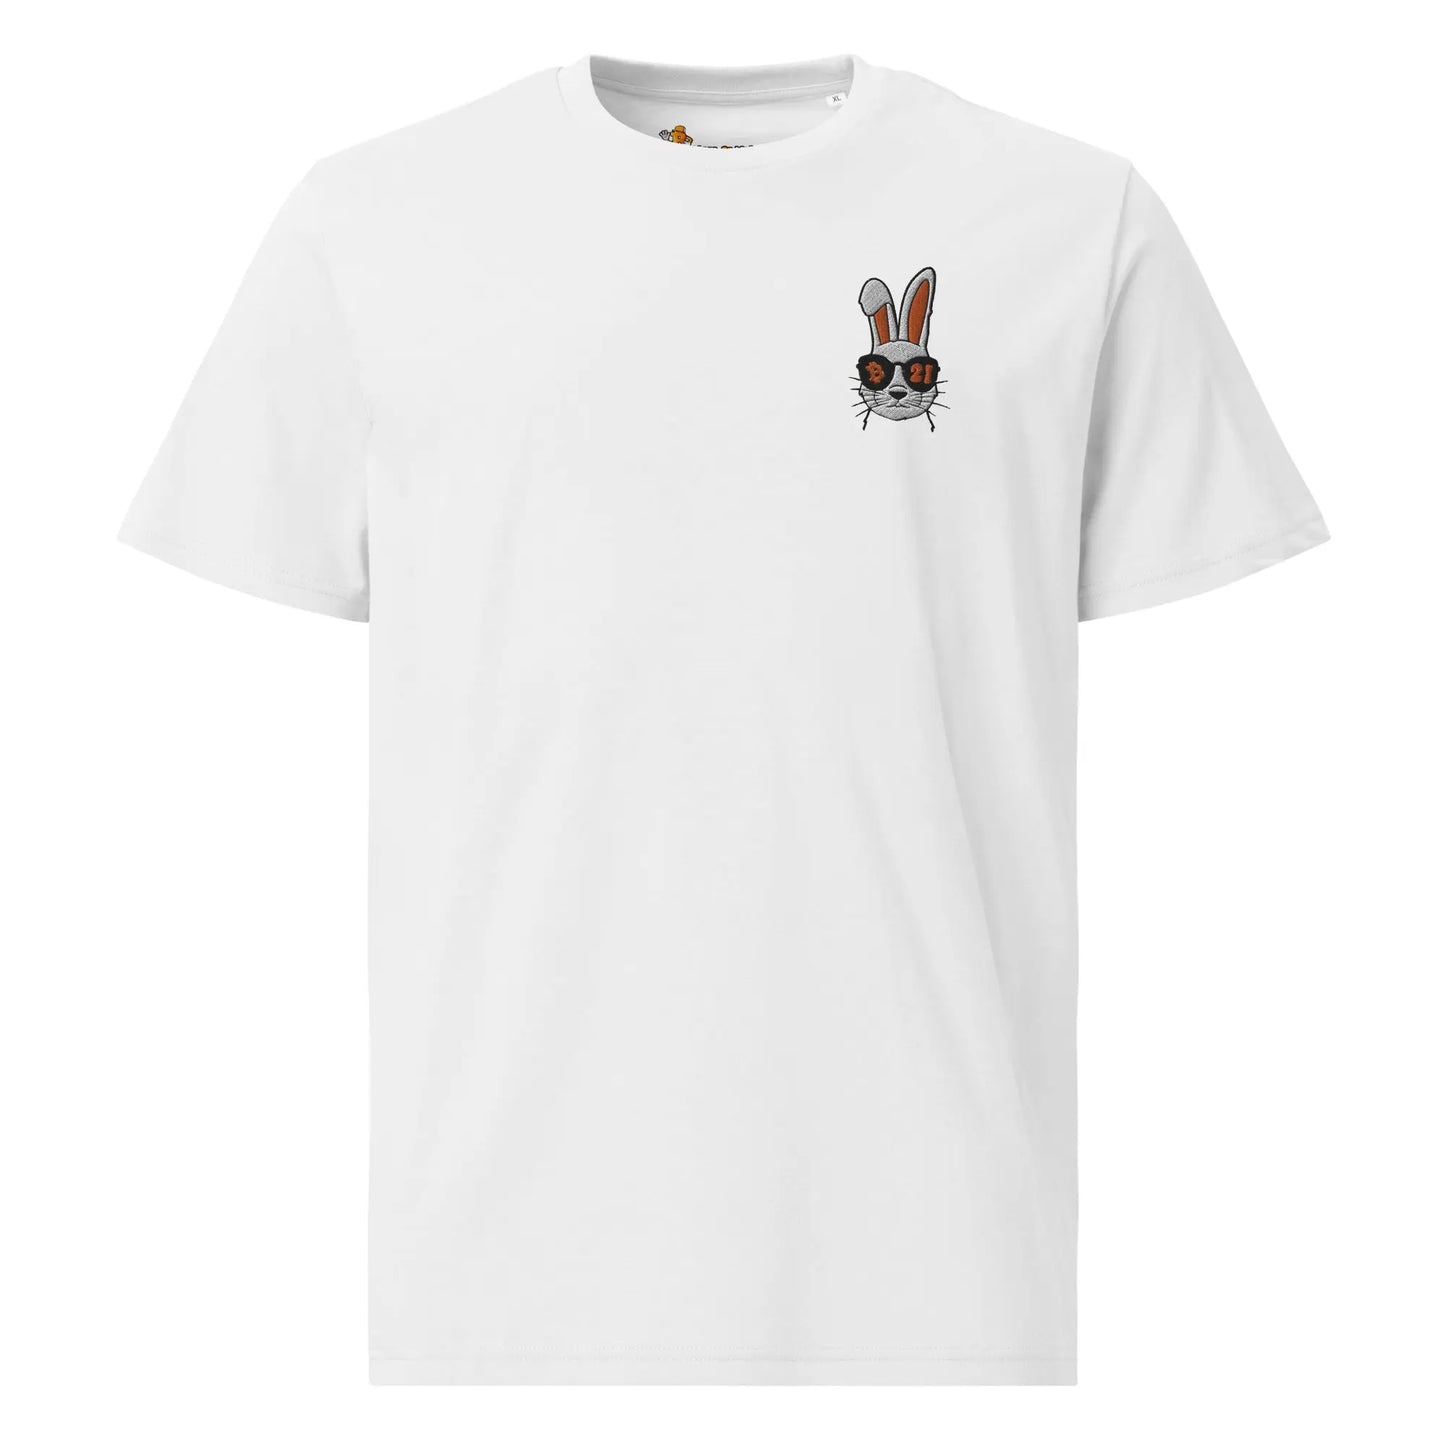 Rabbit 21 - Premium Embroidered Unisex Organic Cotton Bitcoin T-shirt White Color